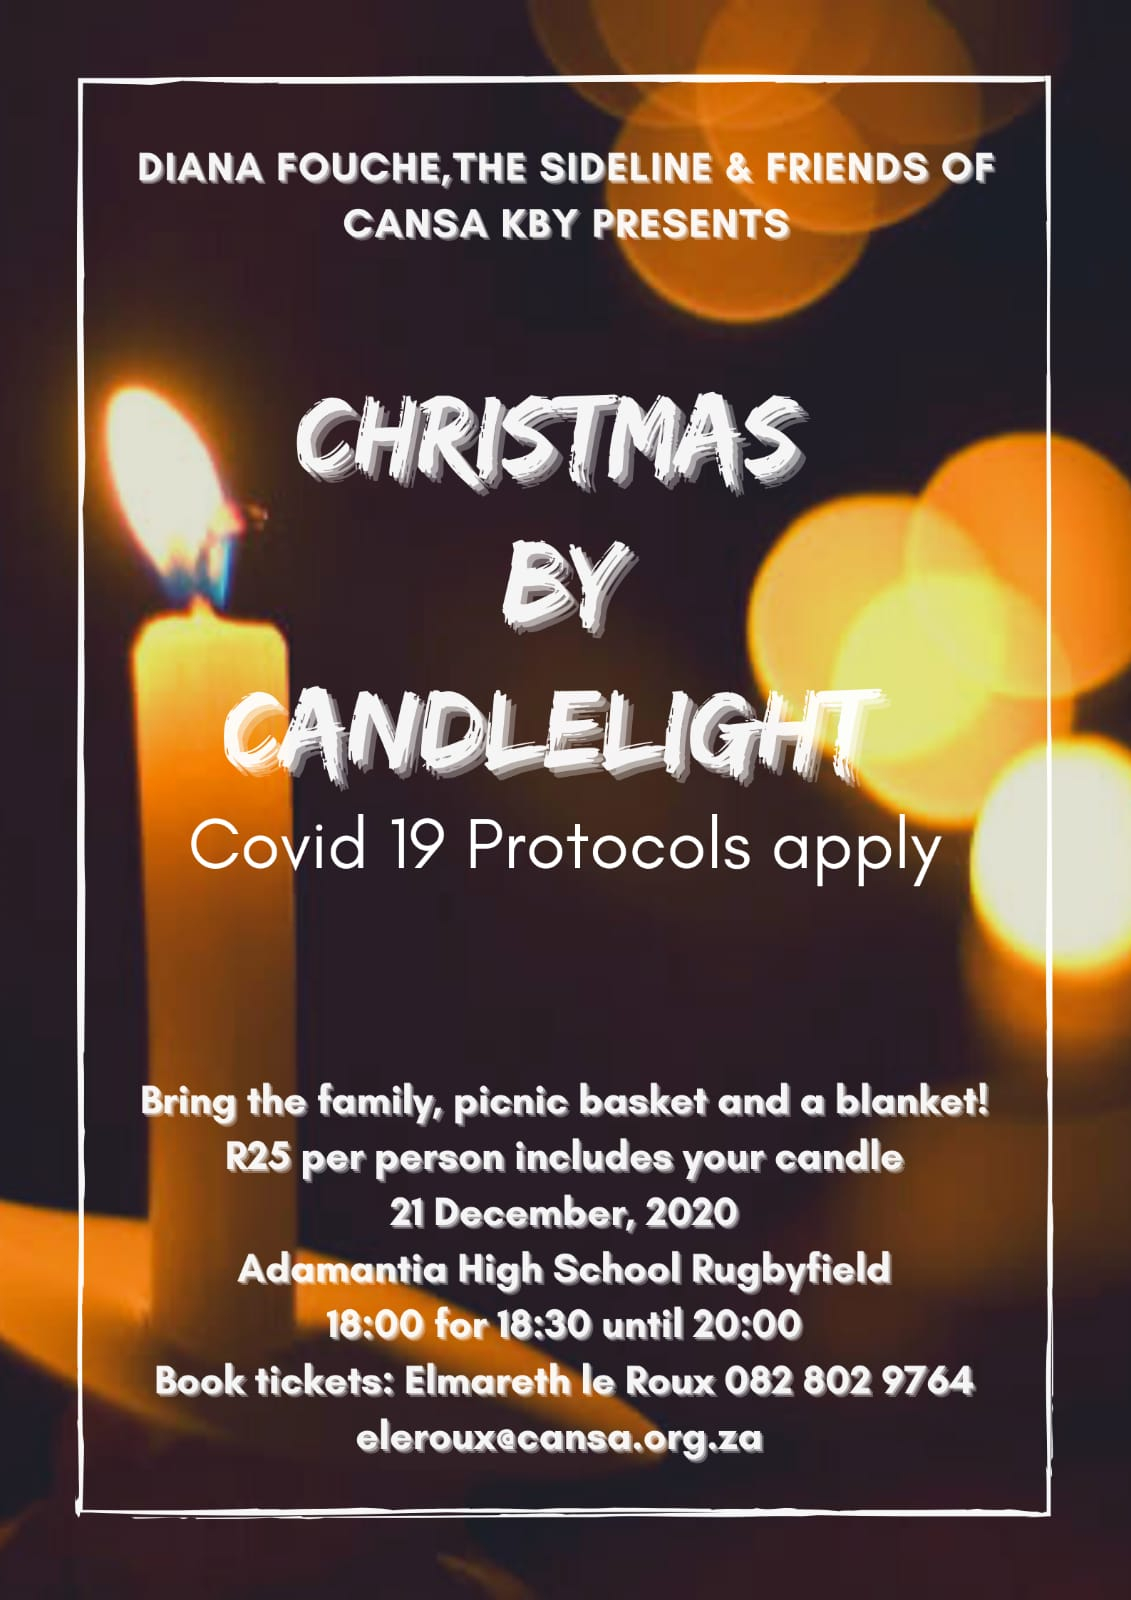 ADAMANTIA_HIGH-CANSA-Christmas_by_Candlelight-EV-20201221